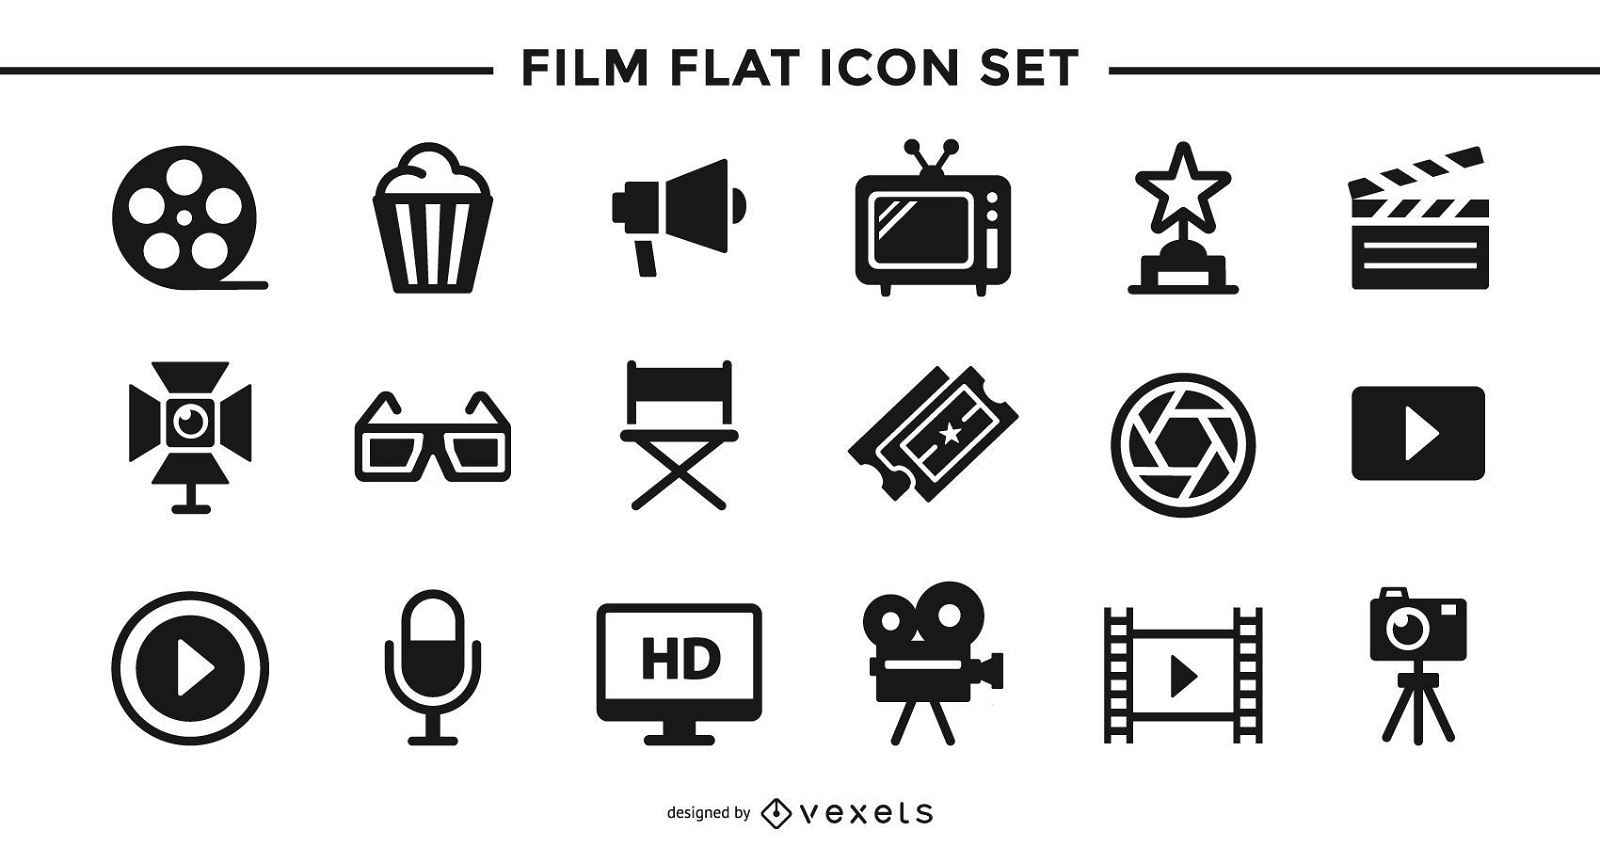 Film Flat Icon Set